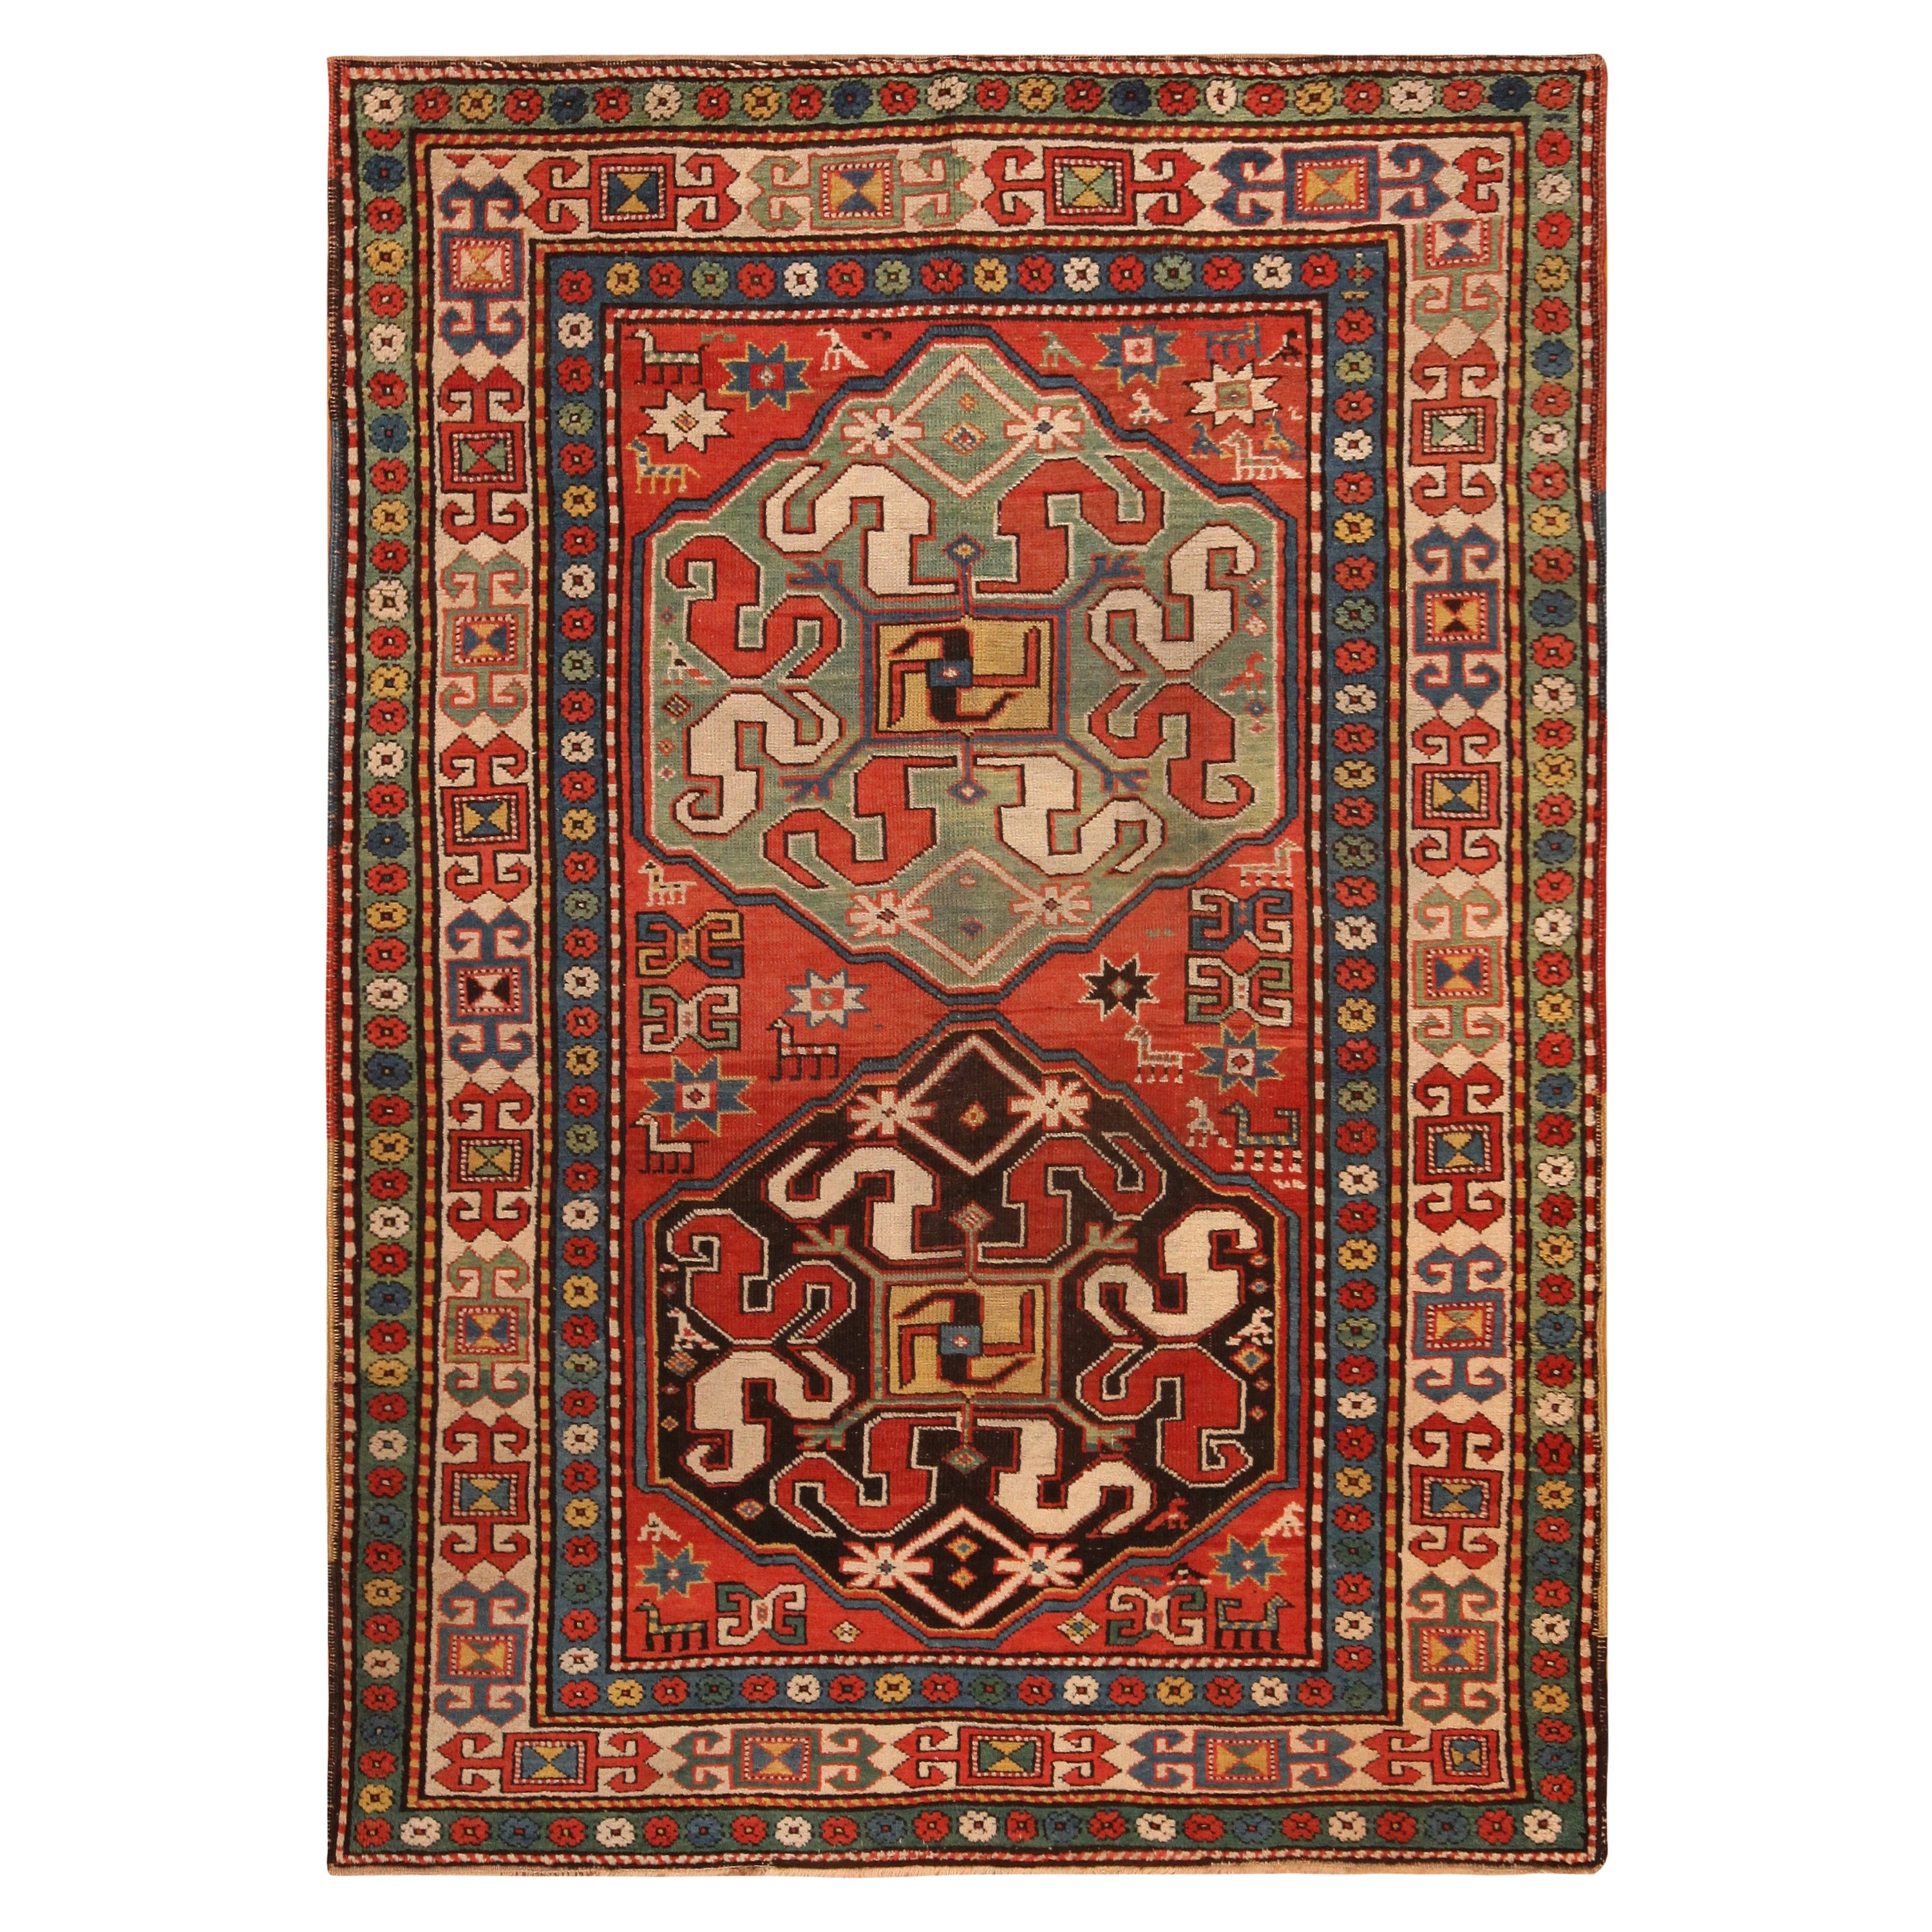 Ancien tapis caucasien tribal Kazak. 4 pieds 4 po. x 6 pieds 6 po.